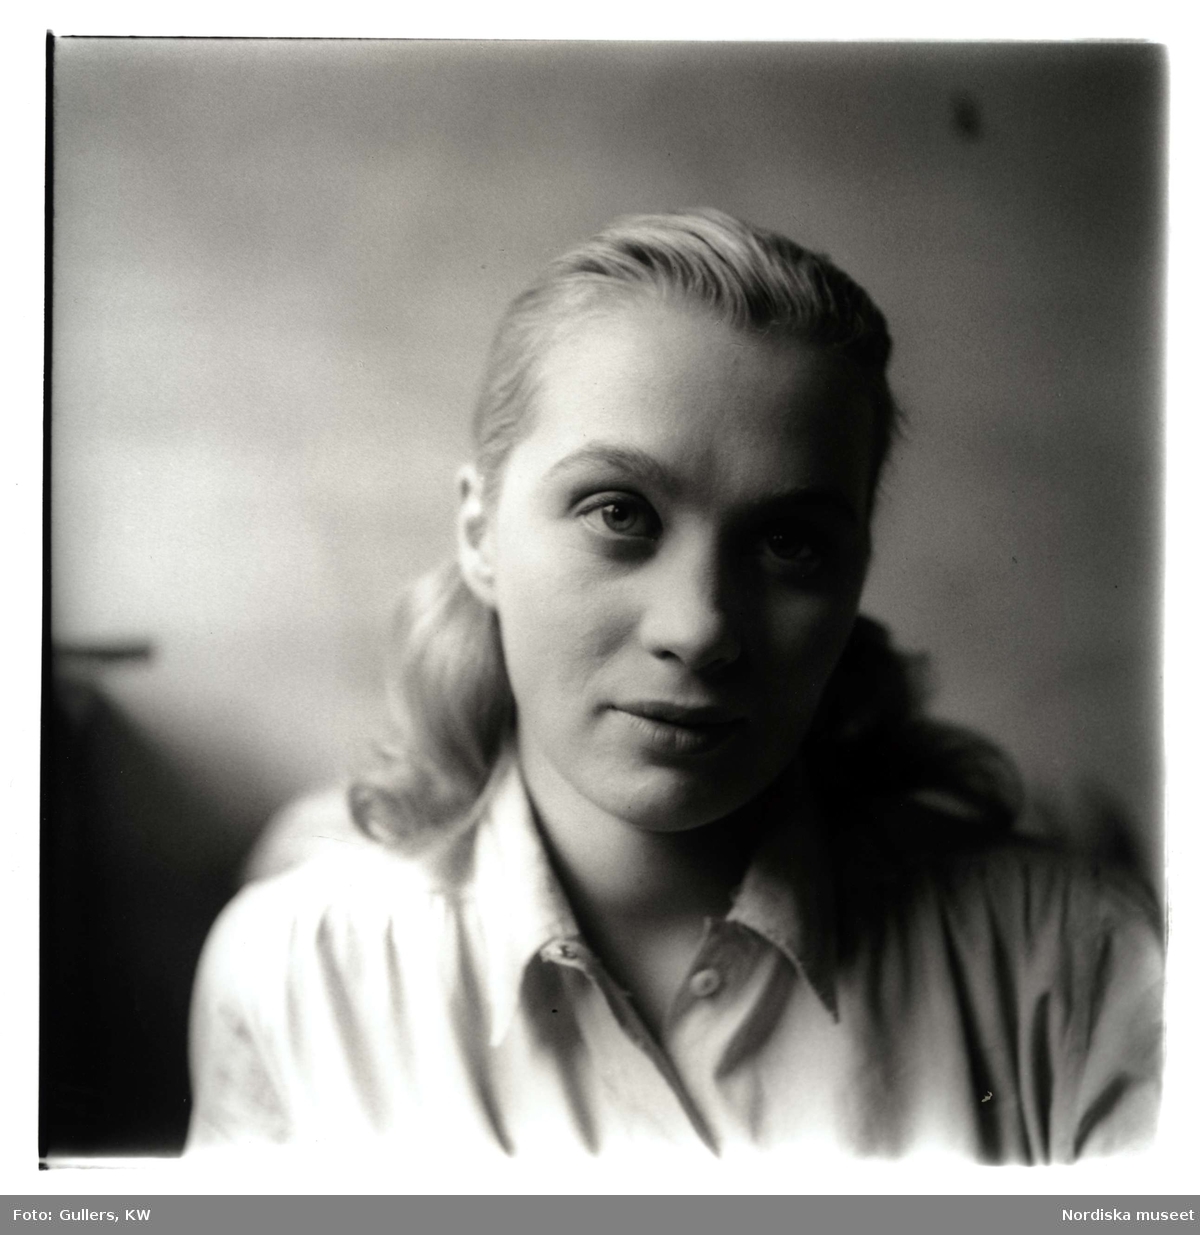 Portrait photo of Mai Zetterling